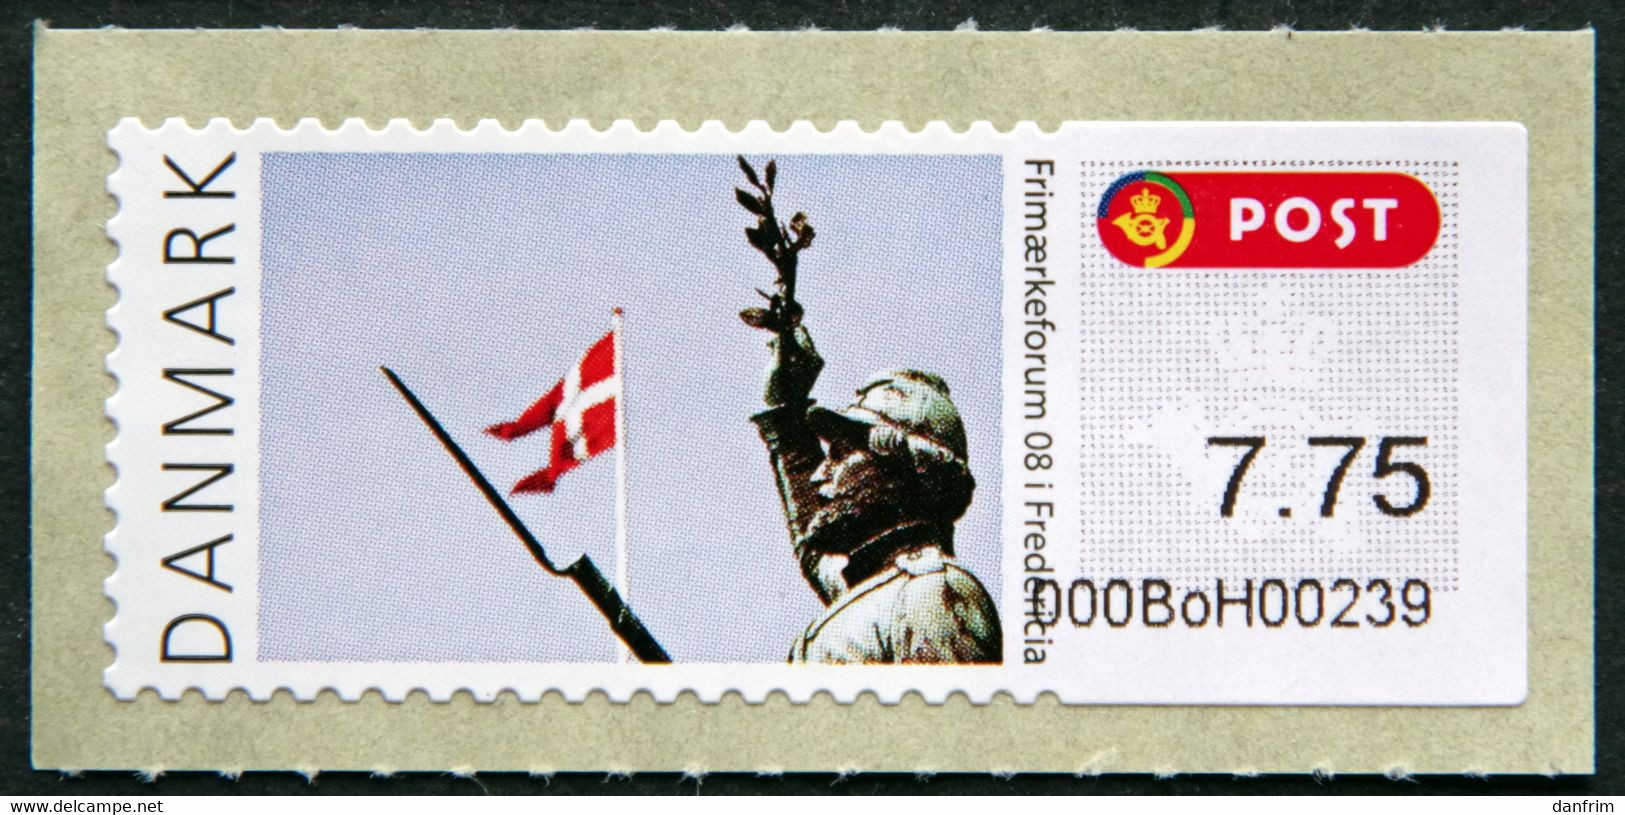 Denmark 2008 MiNr.46 (**) ( Lot H 575 ) ATM Franking Labels - Vignette [ATM]